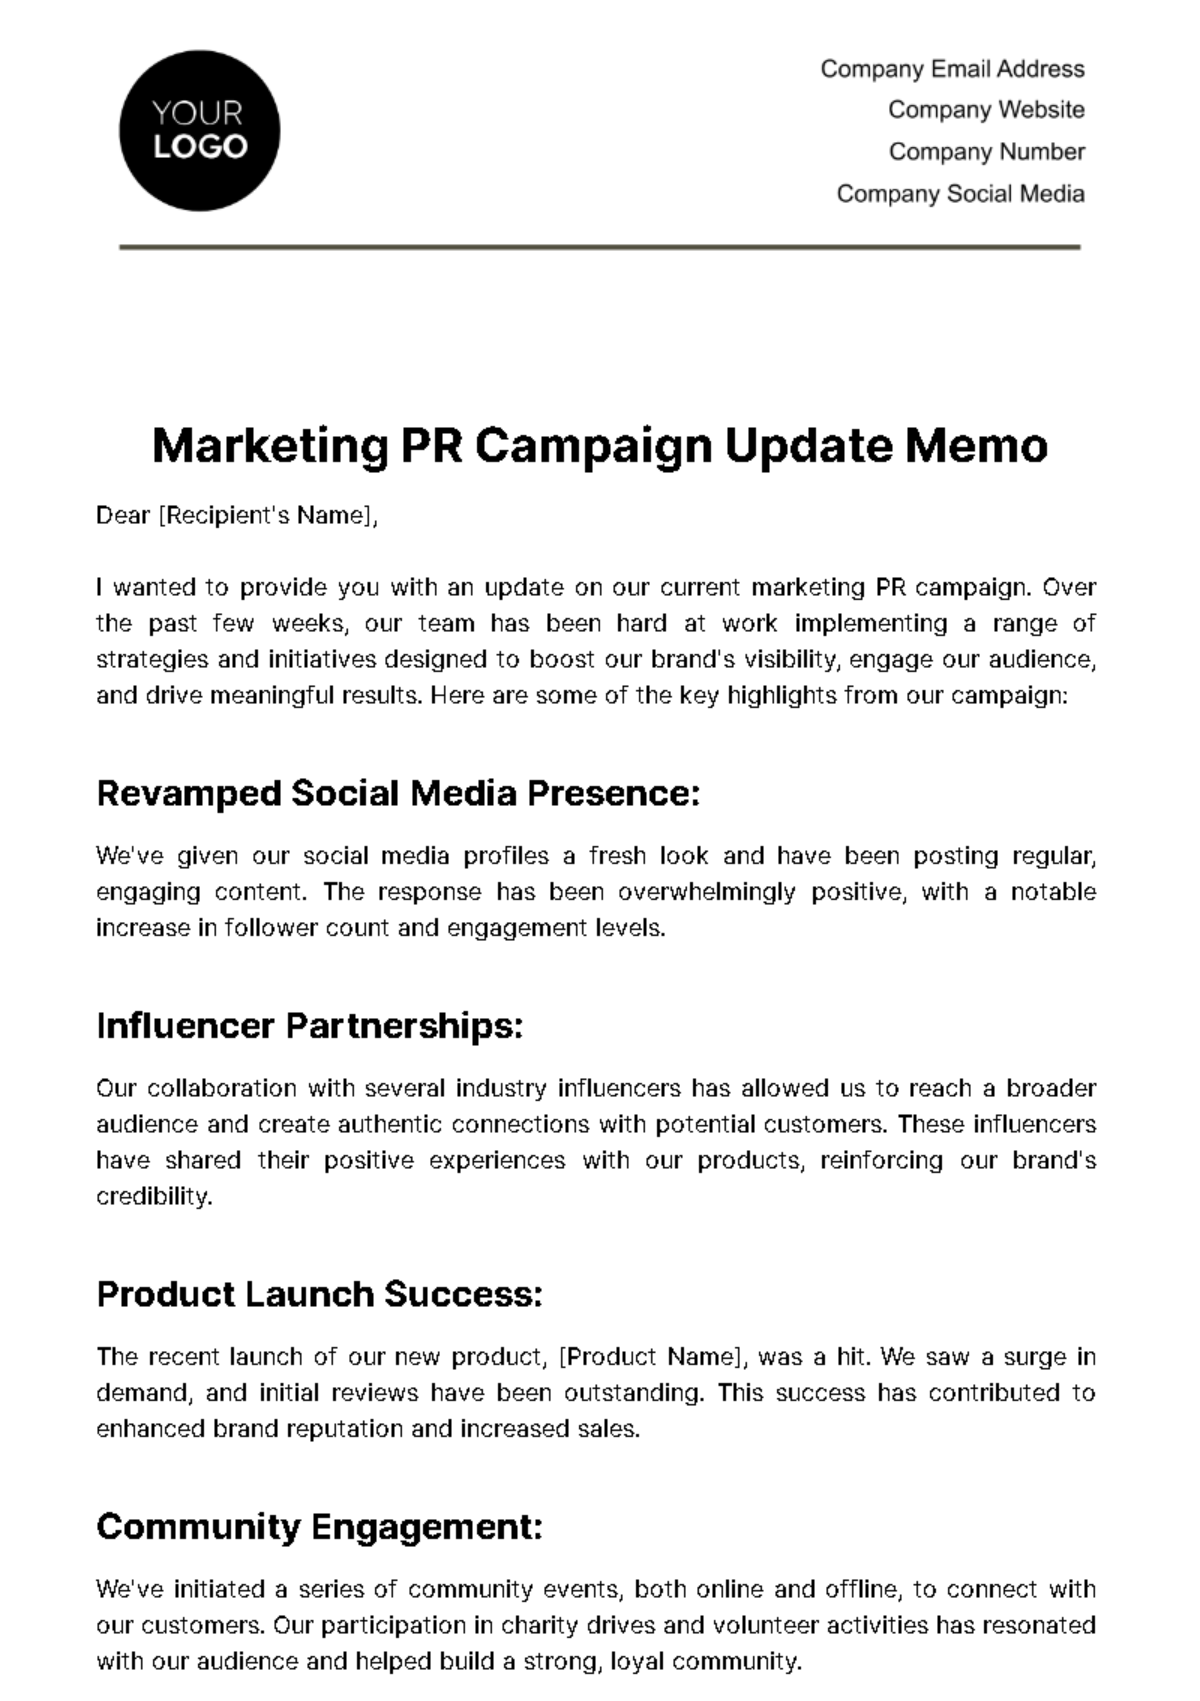 Free Marketing PR Campaign Update Memo Template